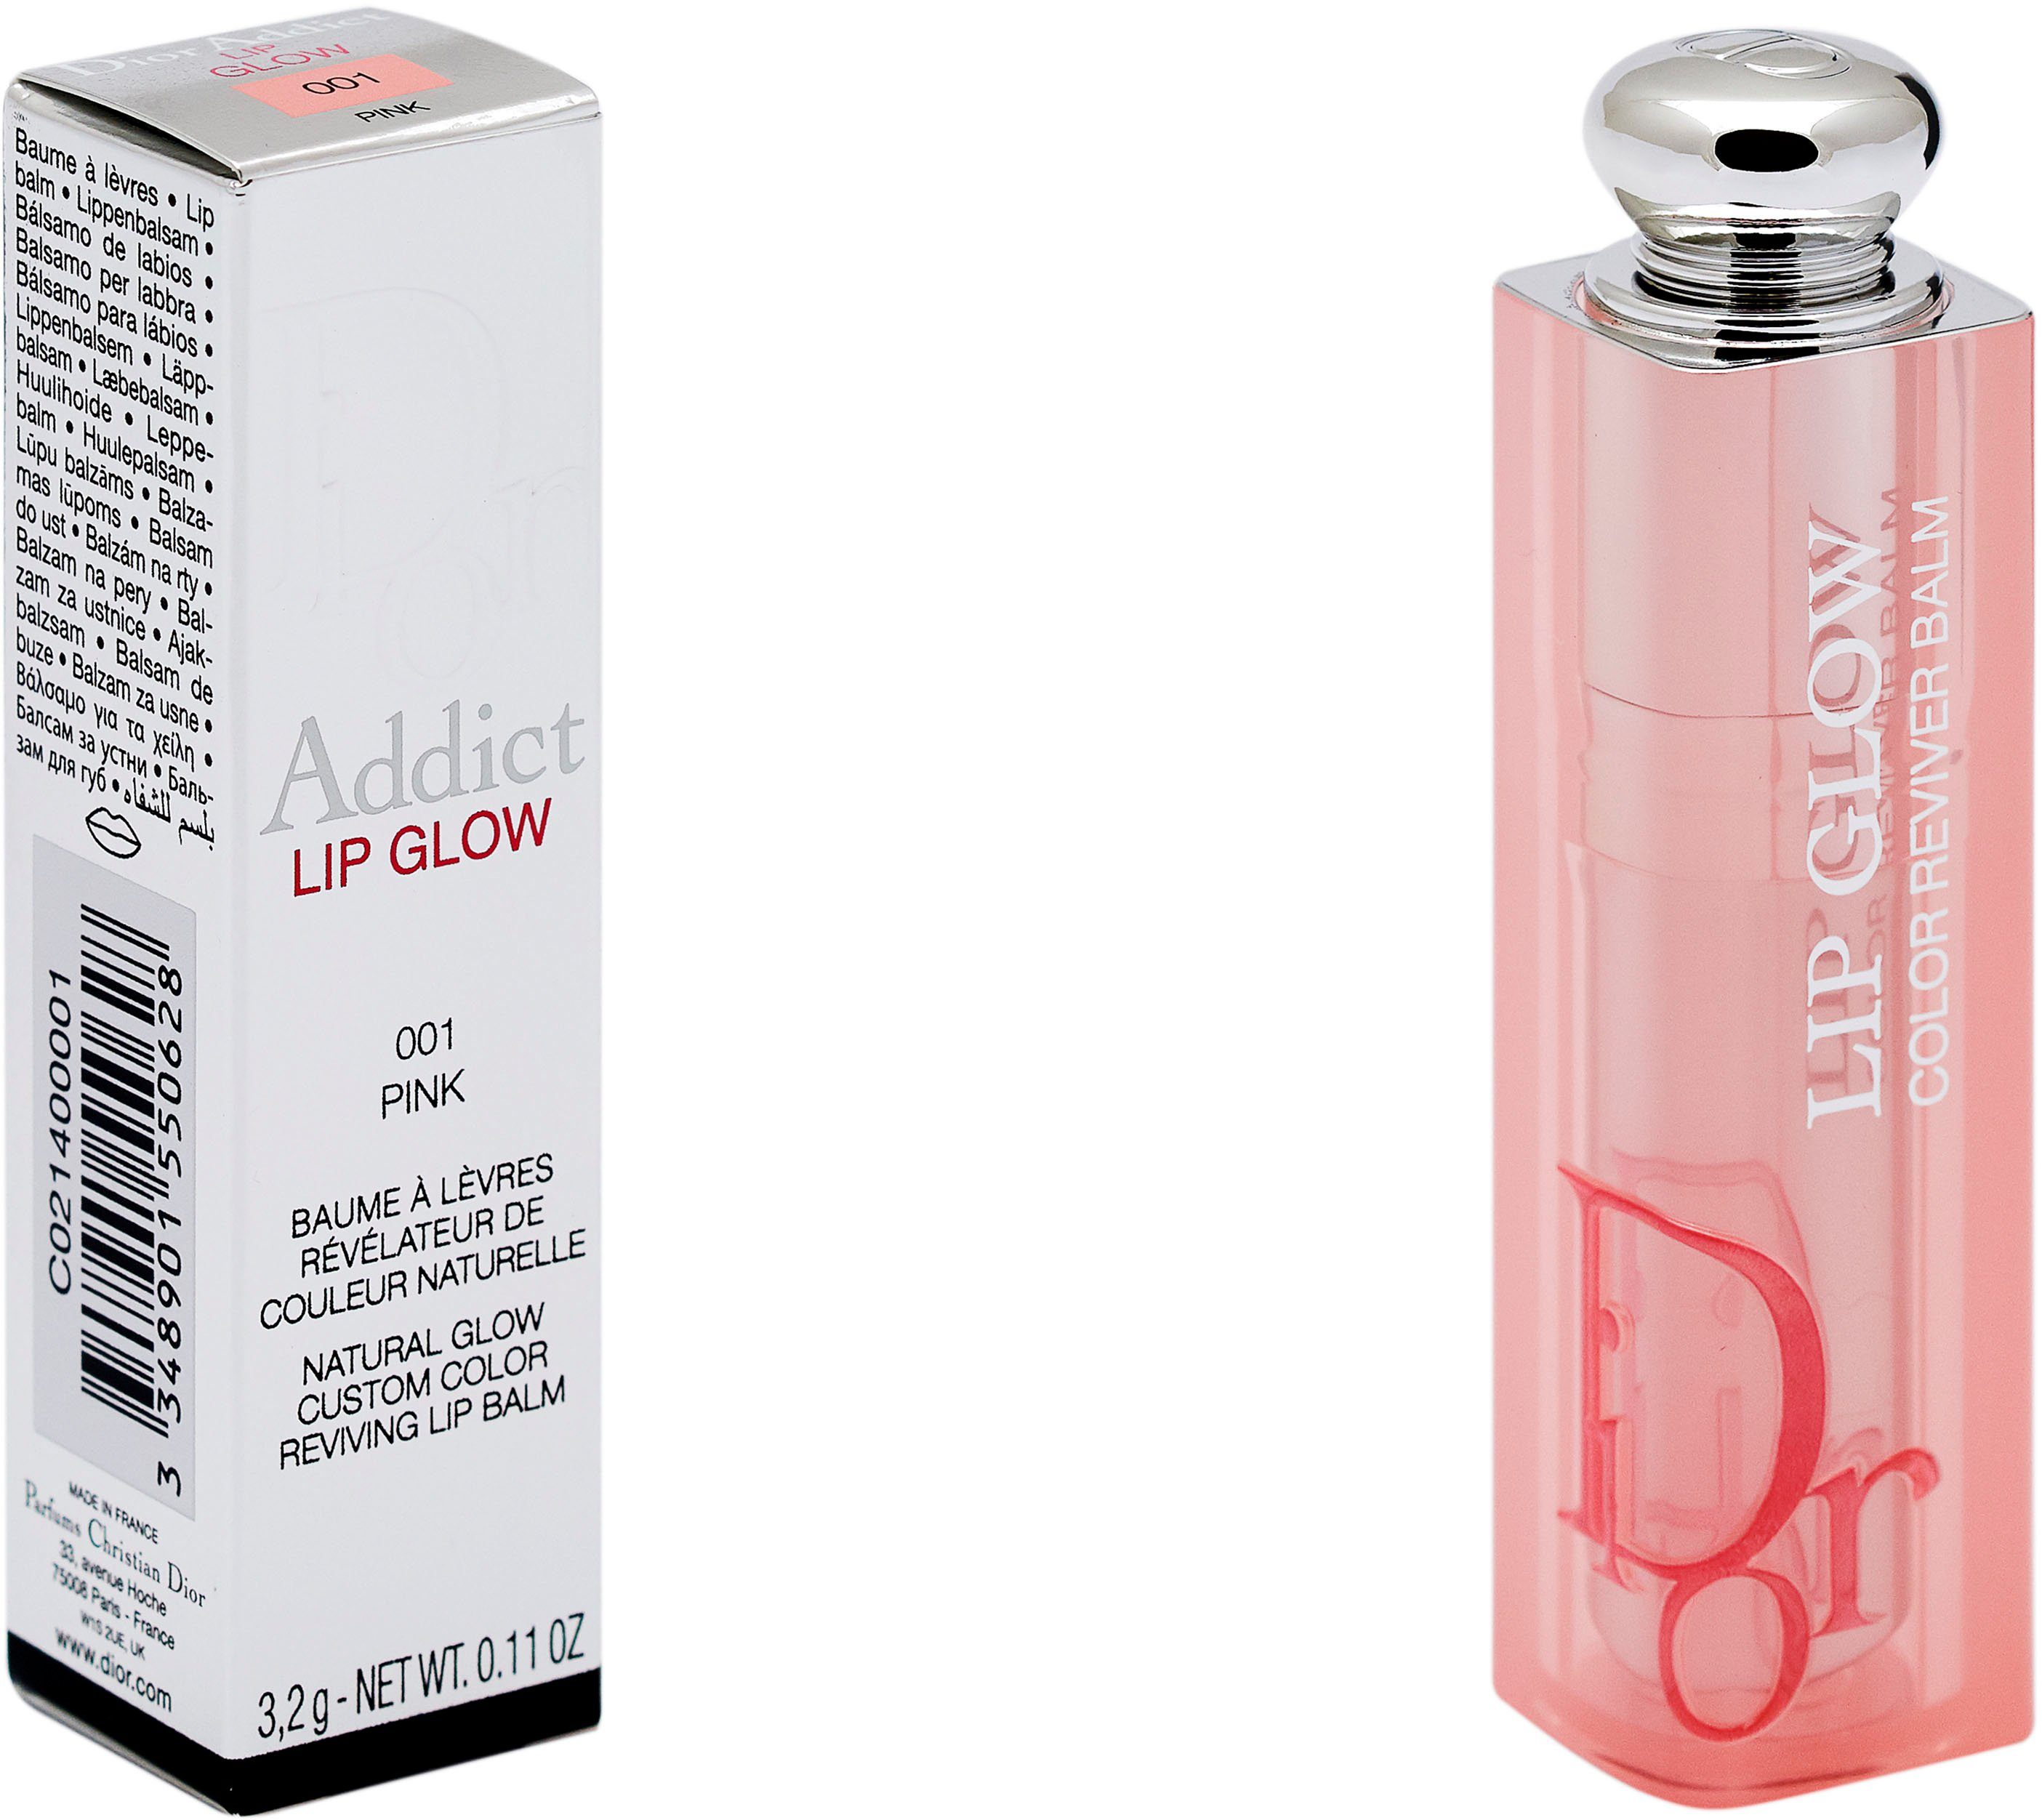 Dior Dior Pink Lippenbalsam Addict 001 Lip Glow